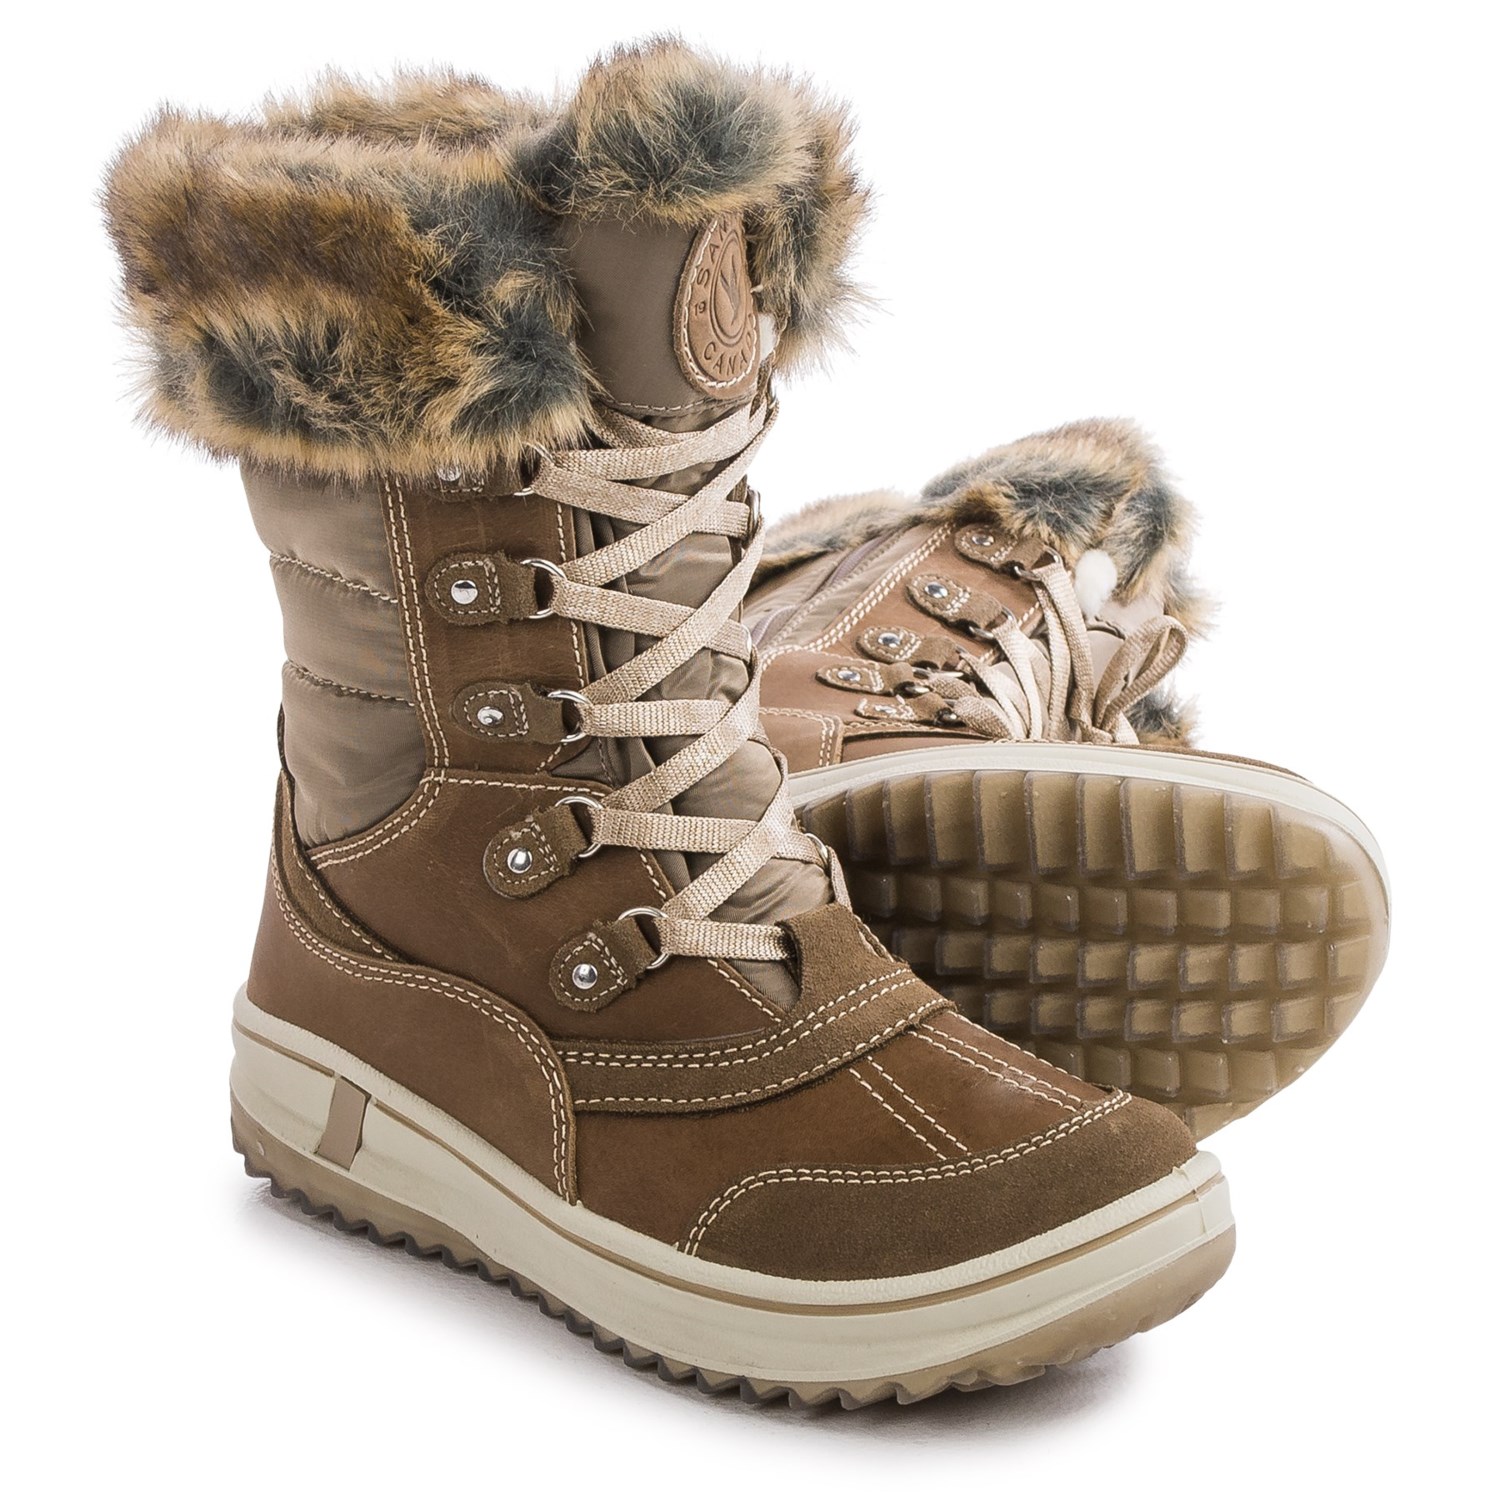 Santana Canada Myrah Snow Boots (For Women) - Save 71%